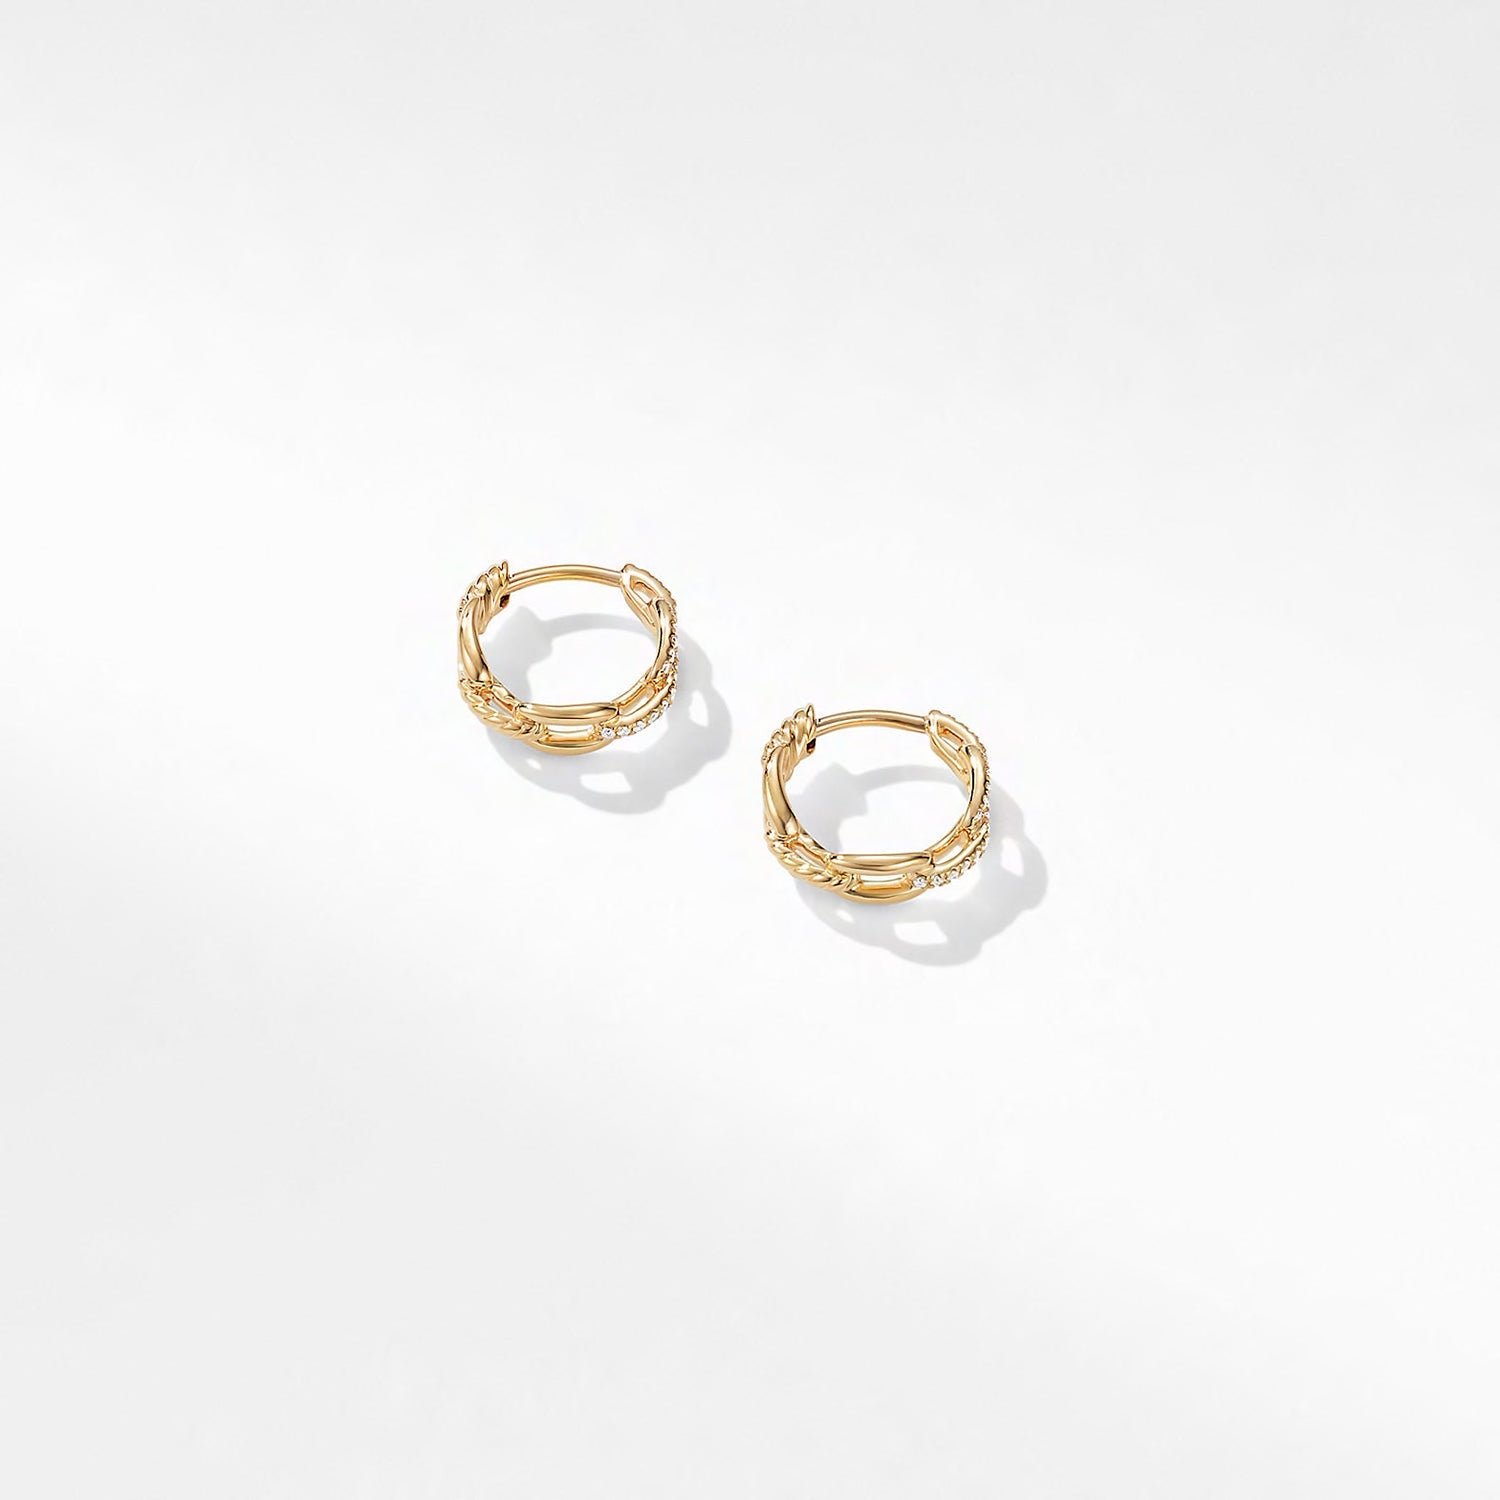 Stax Chain Link Huggie Hoop Earrings with Diamonds in 18K Gold